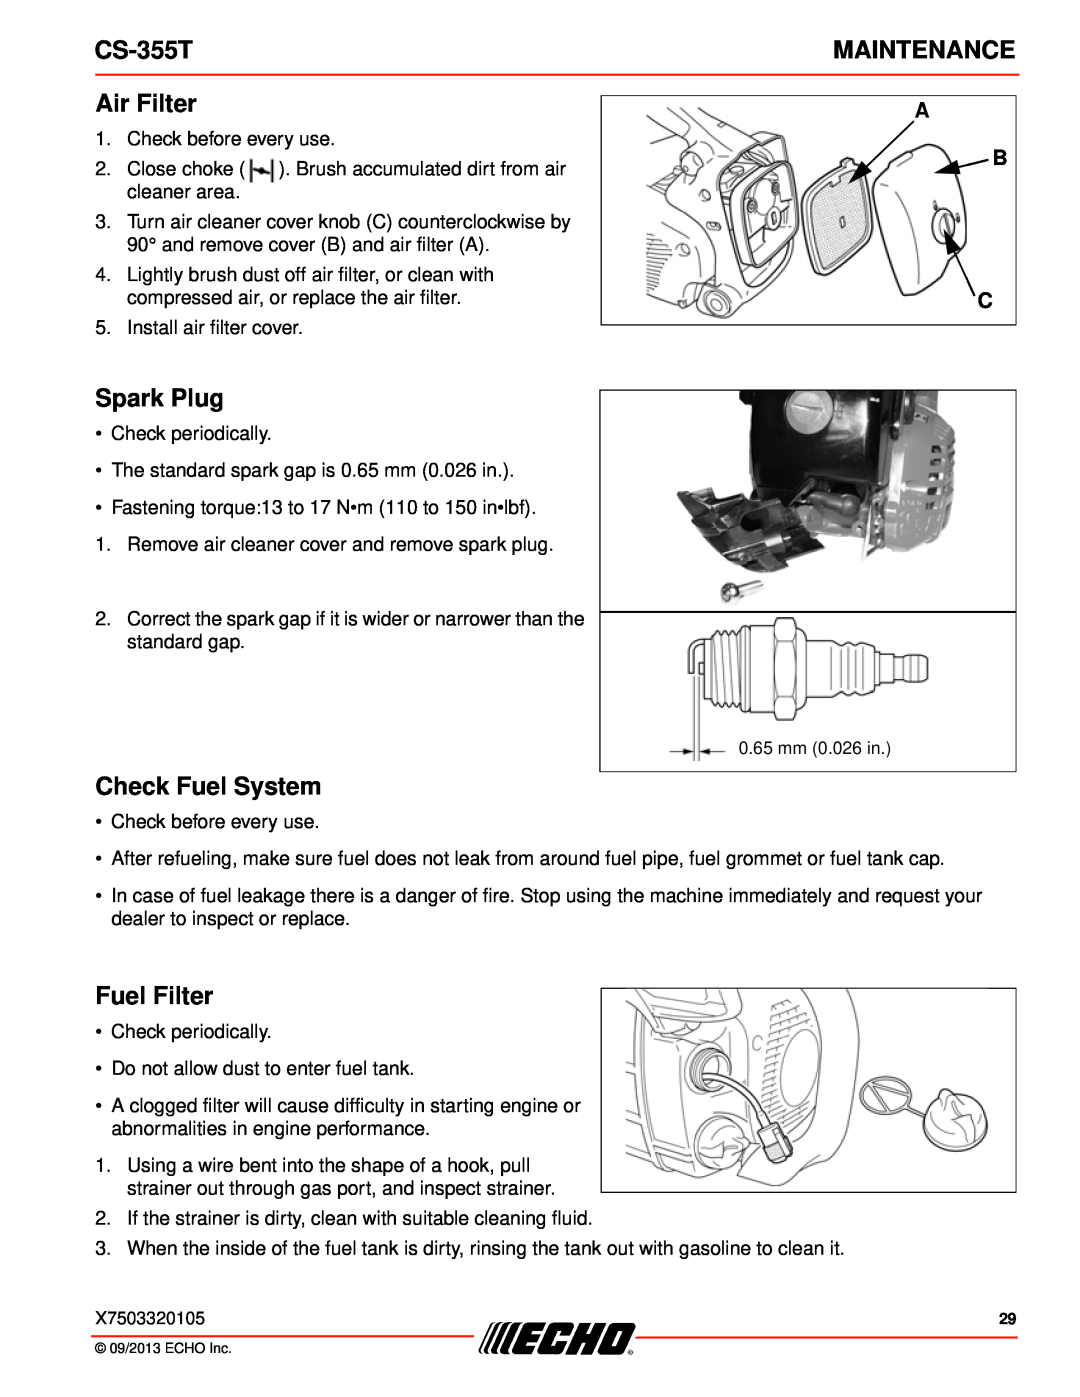 Echo CS-355T instruction manual Air Filter, Spark Plug, Check Fuel System, Fuel Filter, A B C, Maintenance 